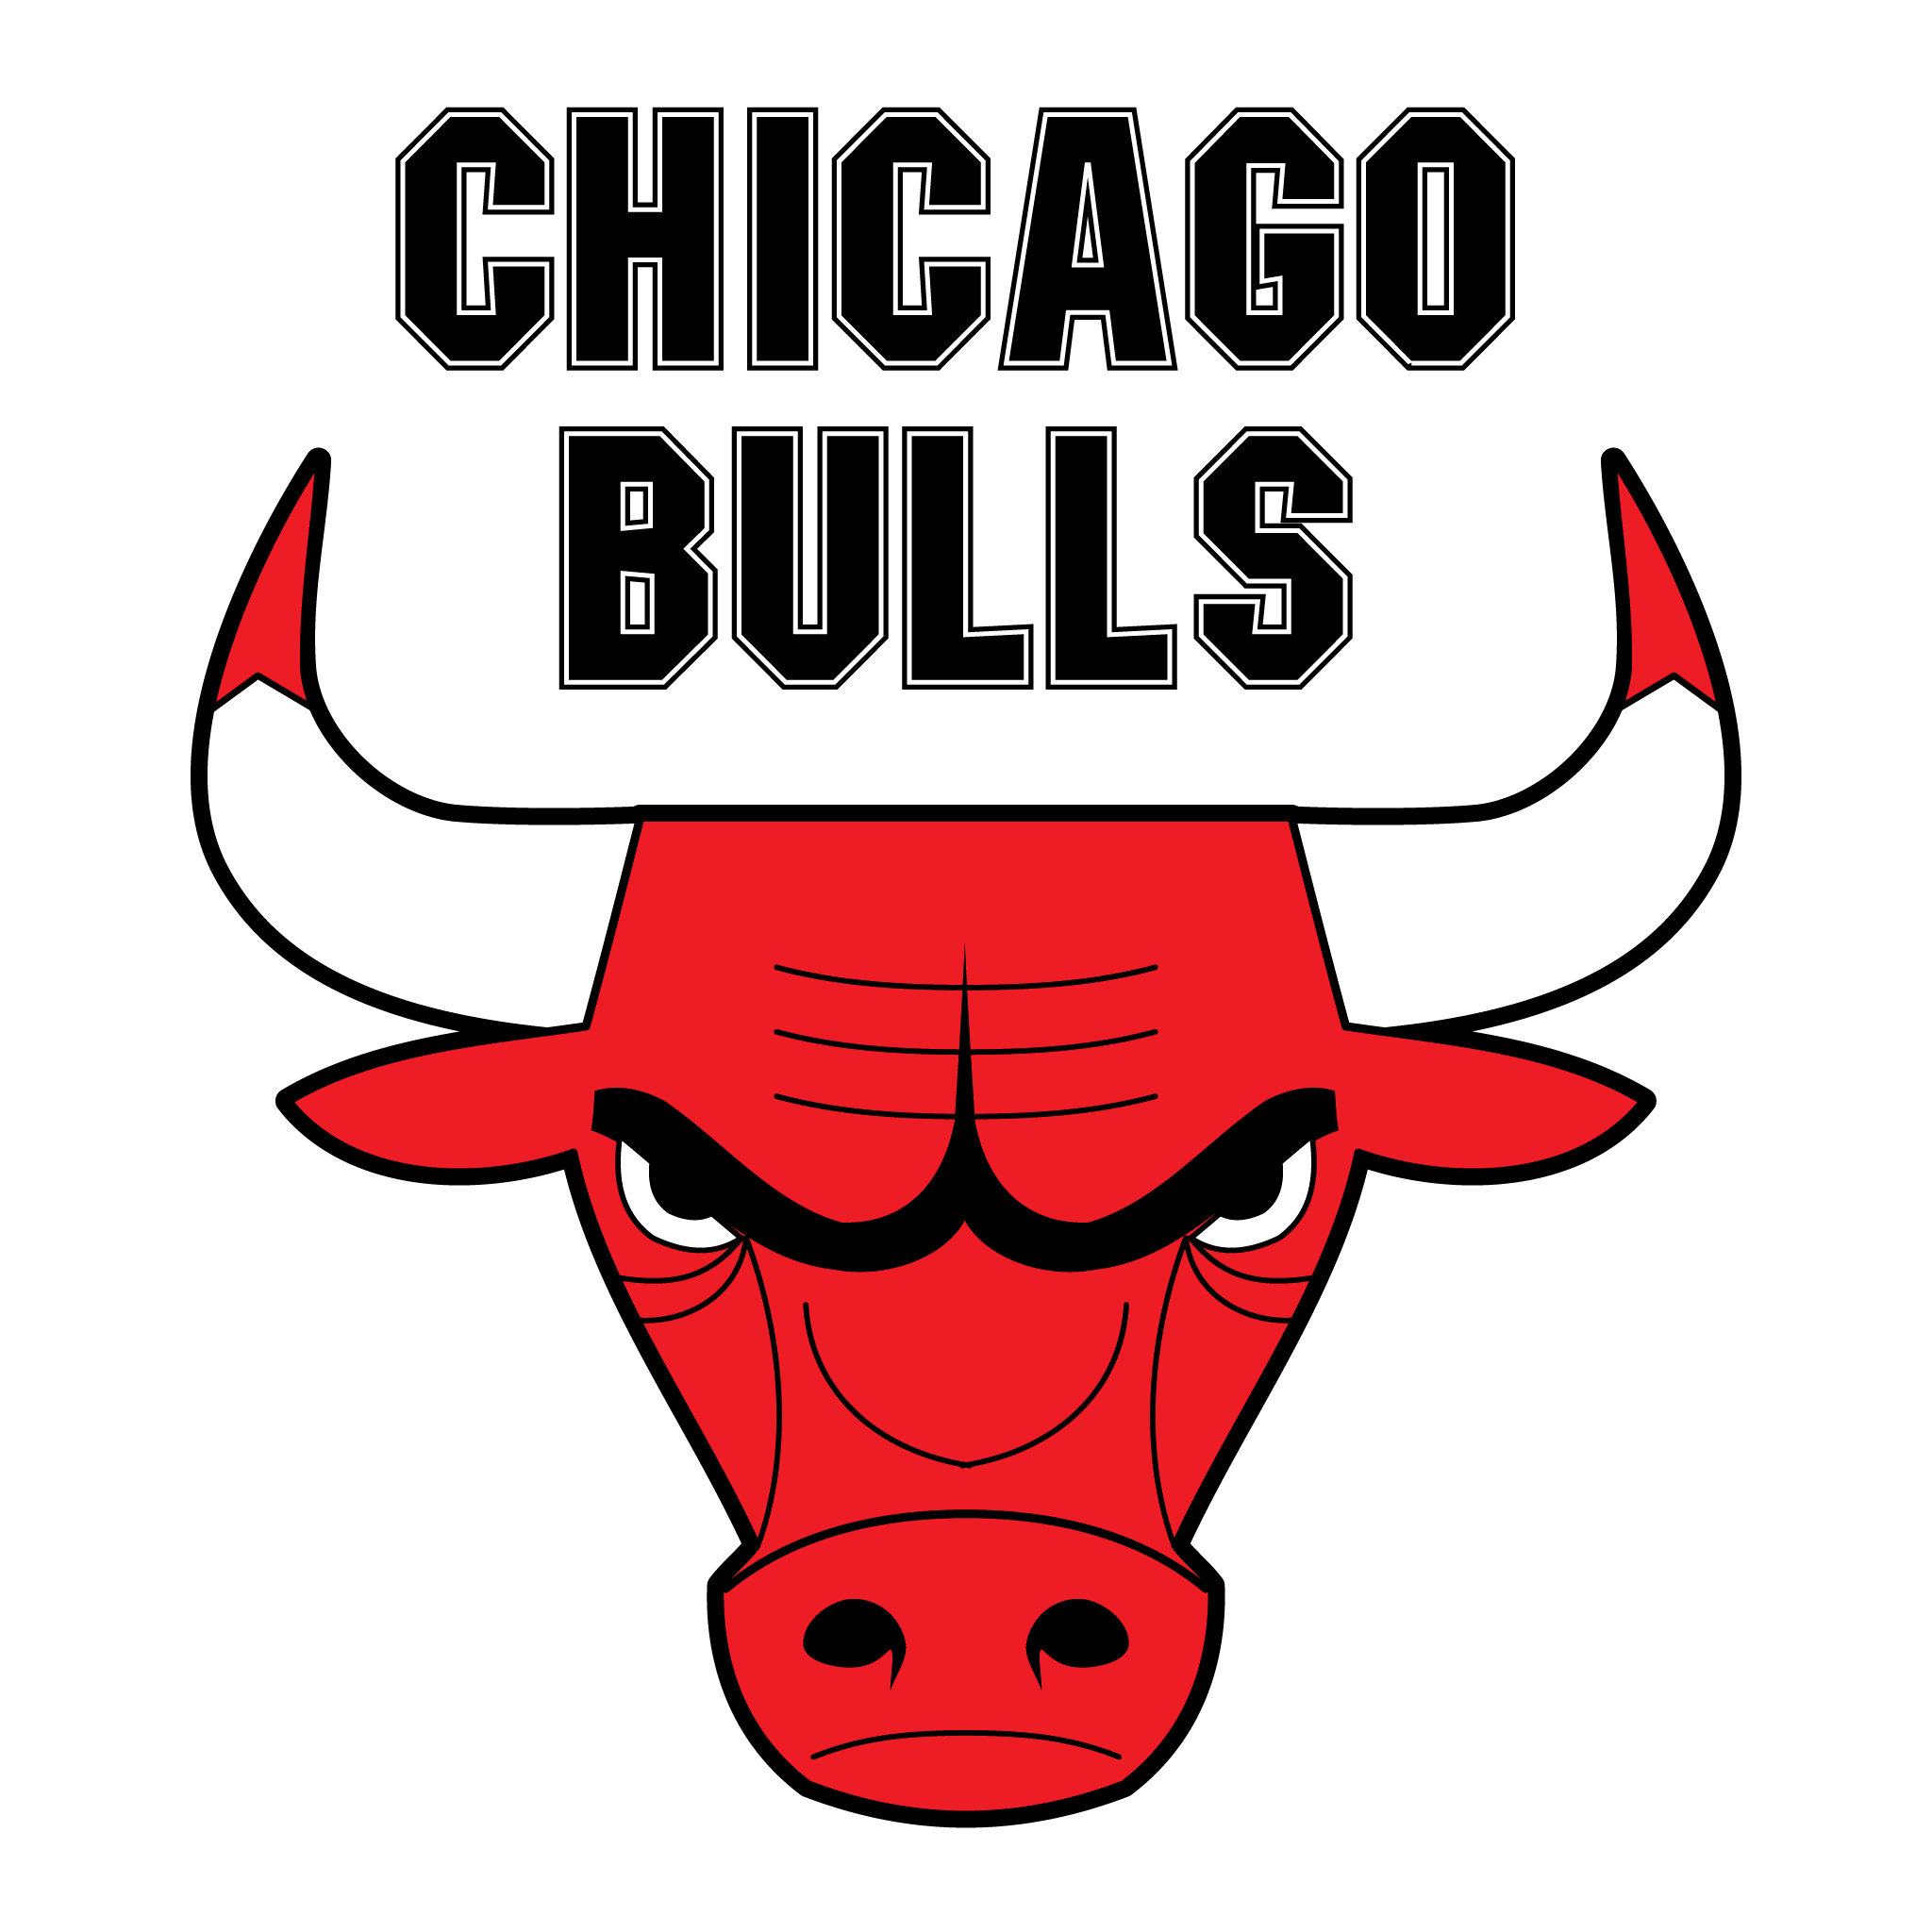 brasao do chicago bulls